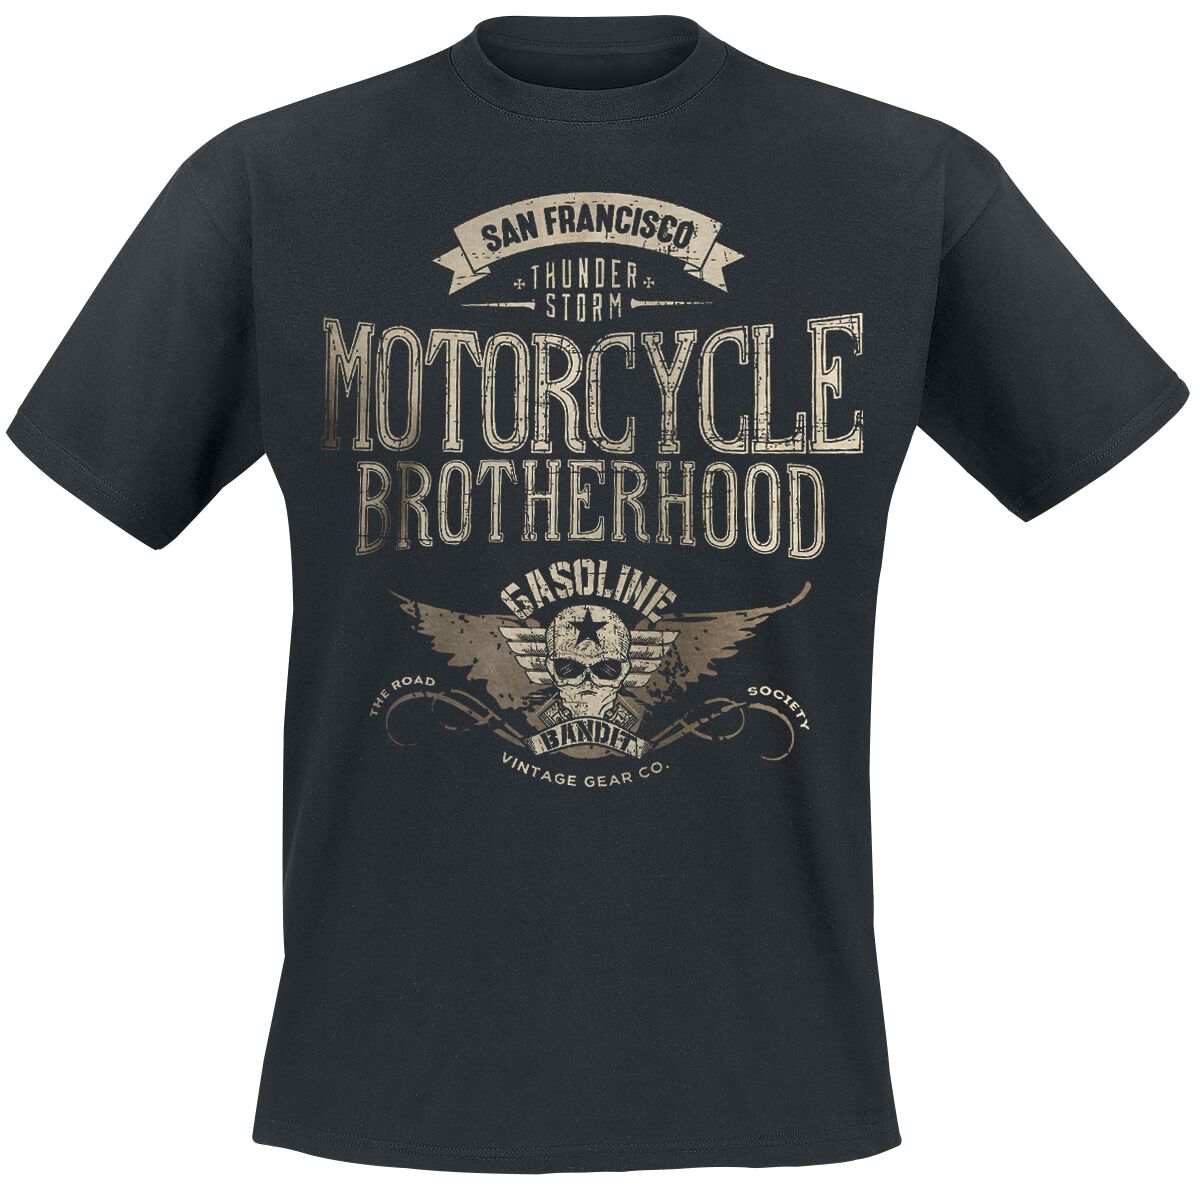 Gasoline Bandit Motorcycle Brotherhood T-Shirt schwarz in XL